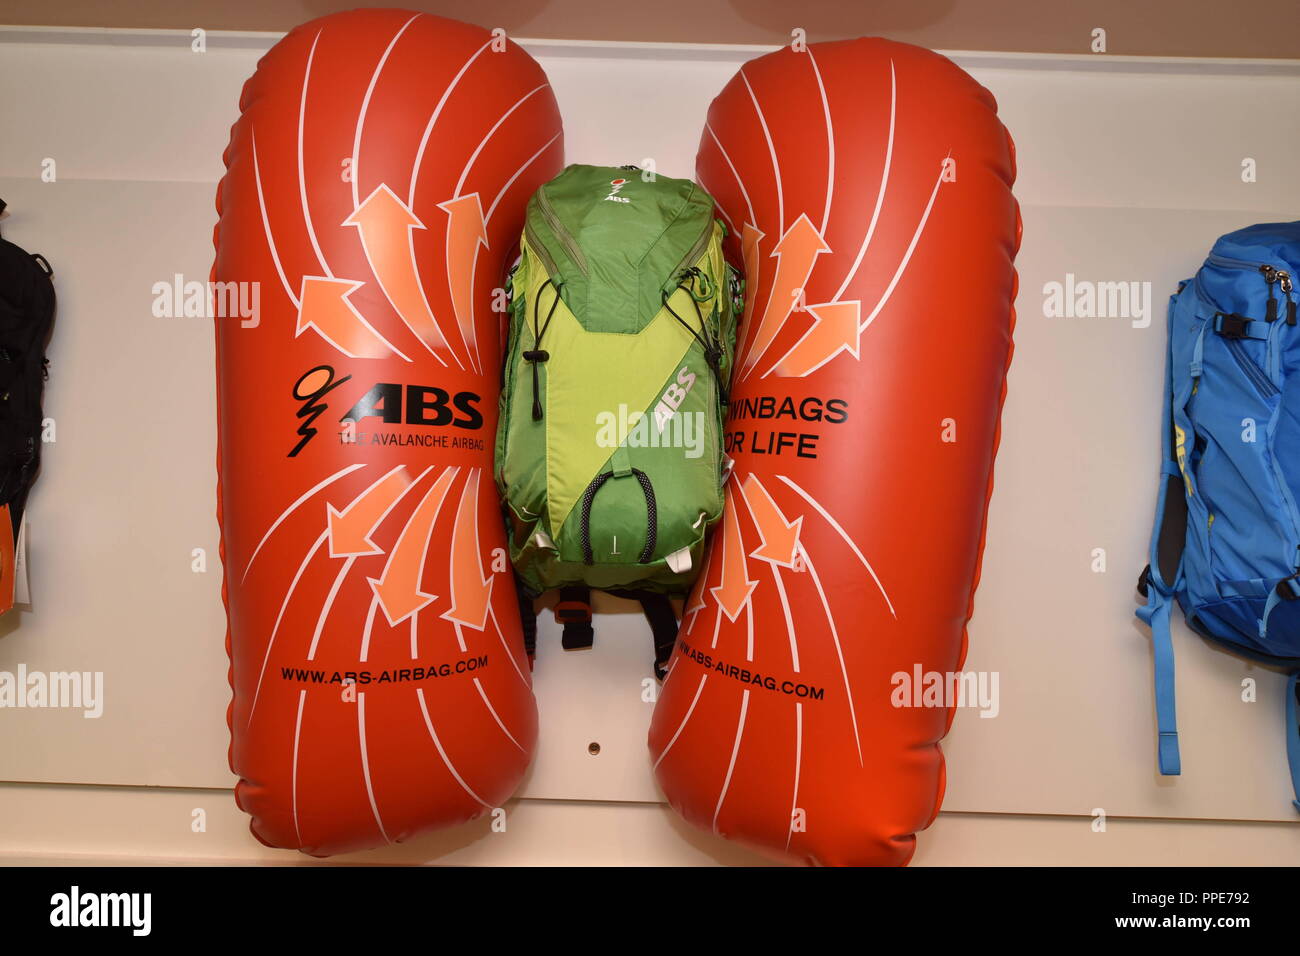 Borsa a valanga di ABS Peter Aschauer GmbH con gonfiato a valanga airbag  Foto stock - Alamy